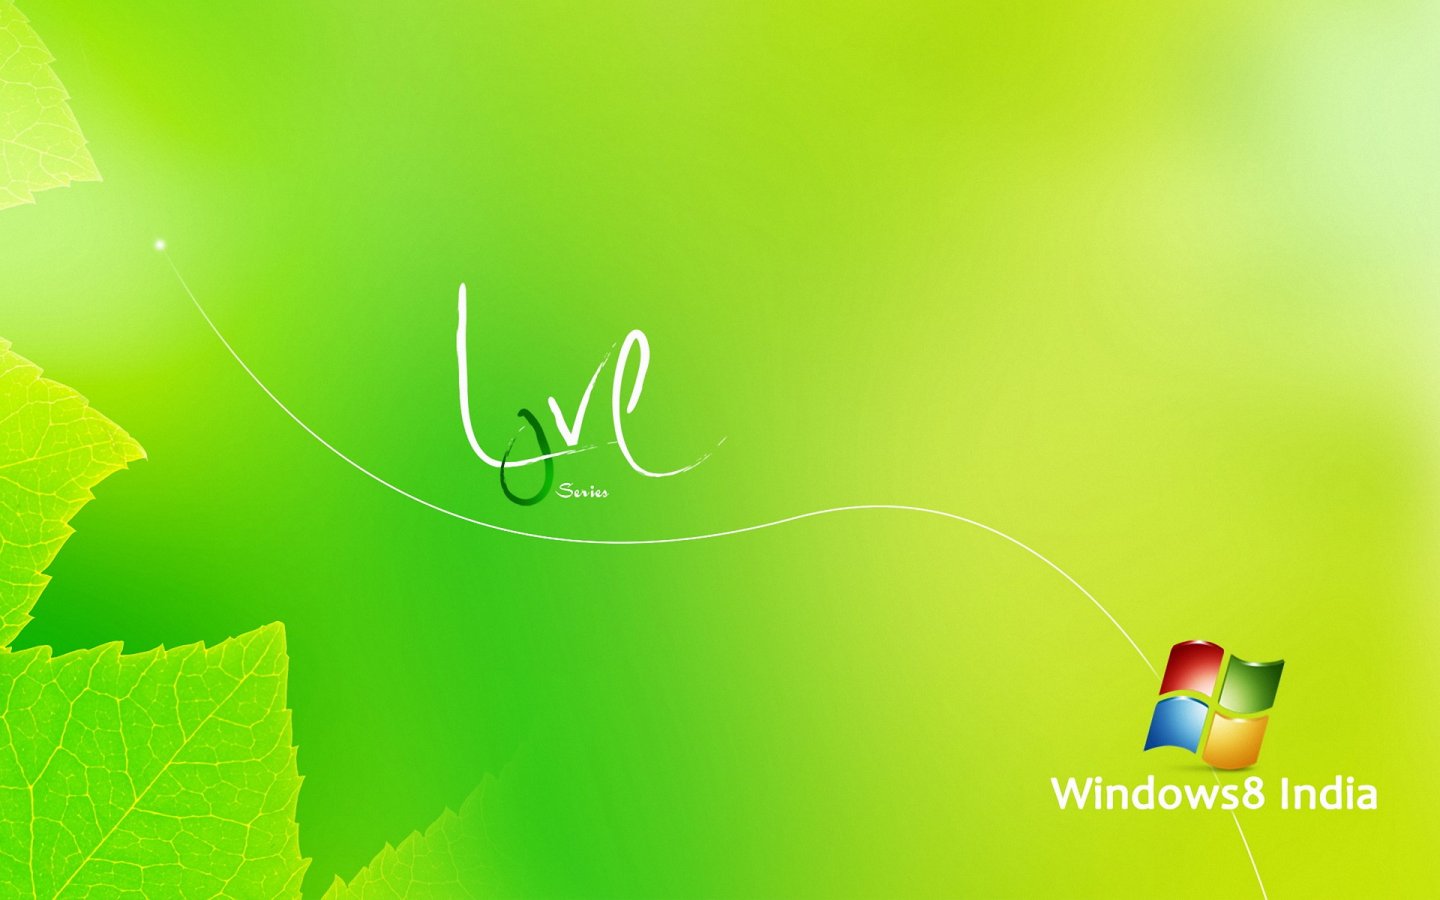 Windows 8 Wallpaper For Windows 7 Free Download Wallpapers Desk